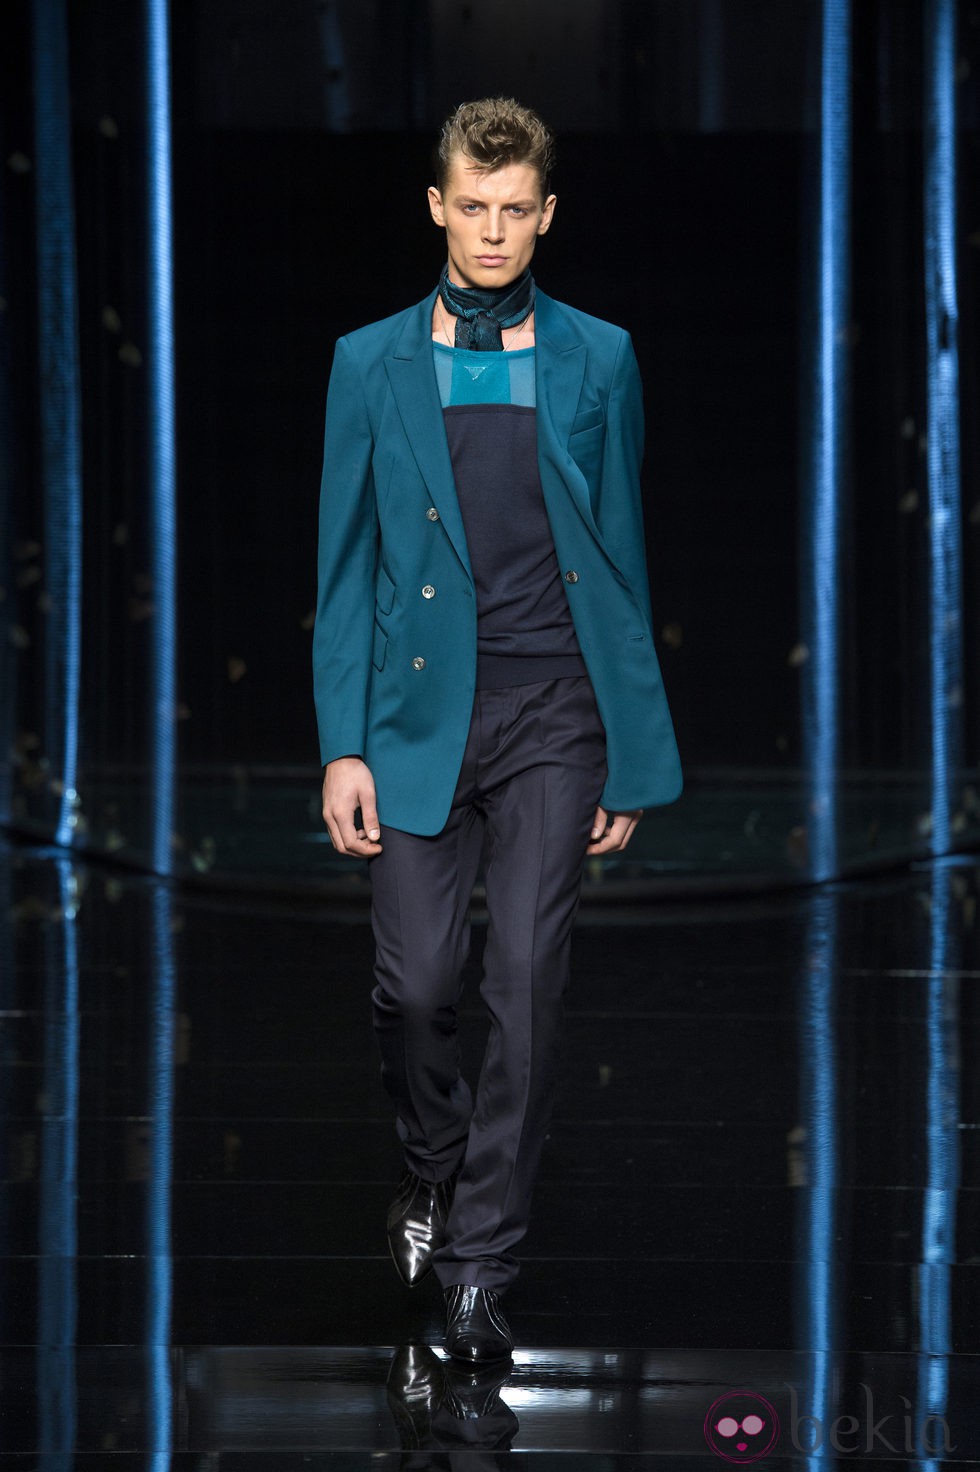 blazer azul de Roberto Cavali en la Semana de la Moda masculina de Milán